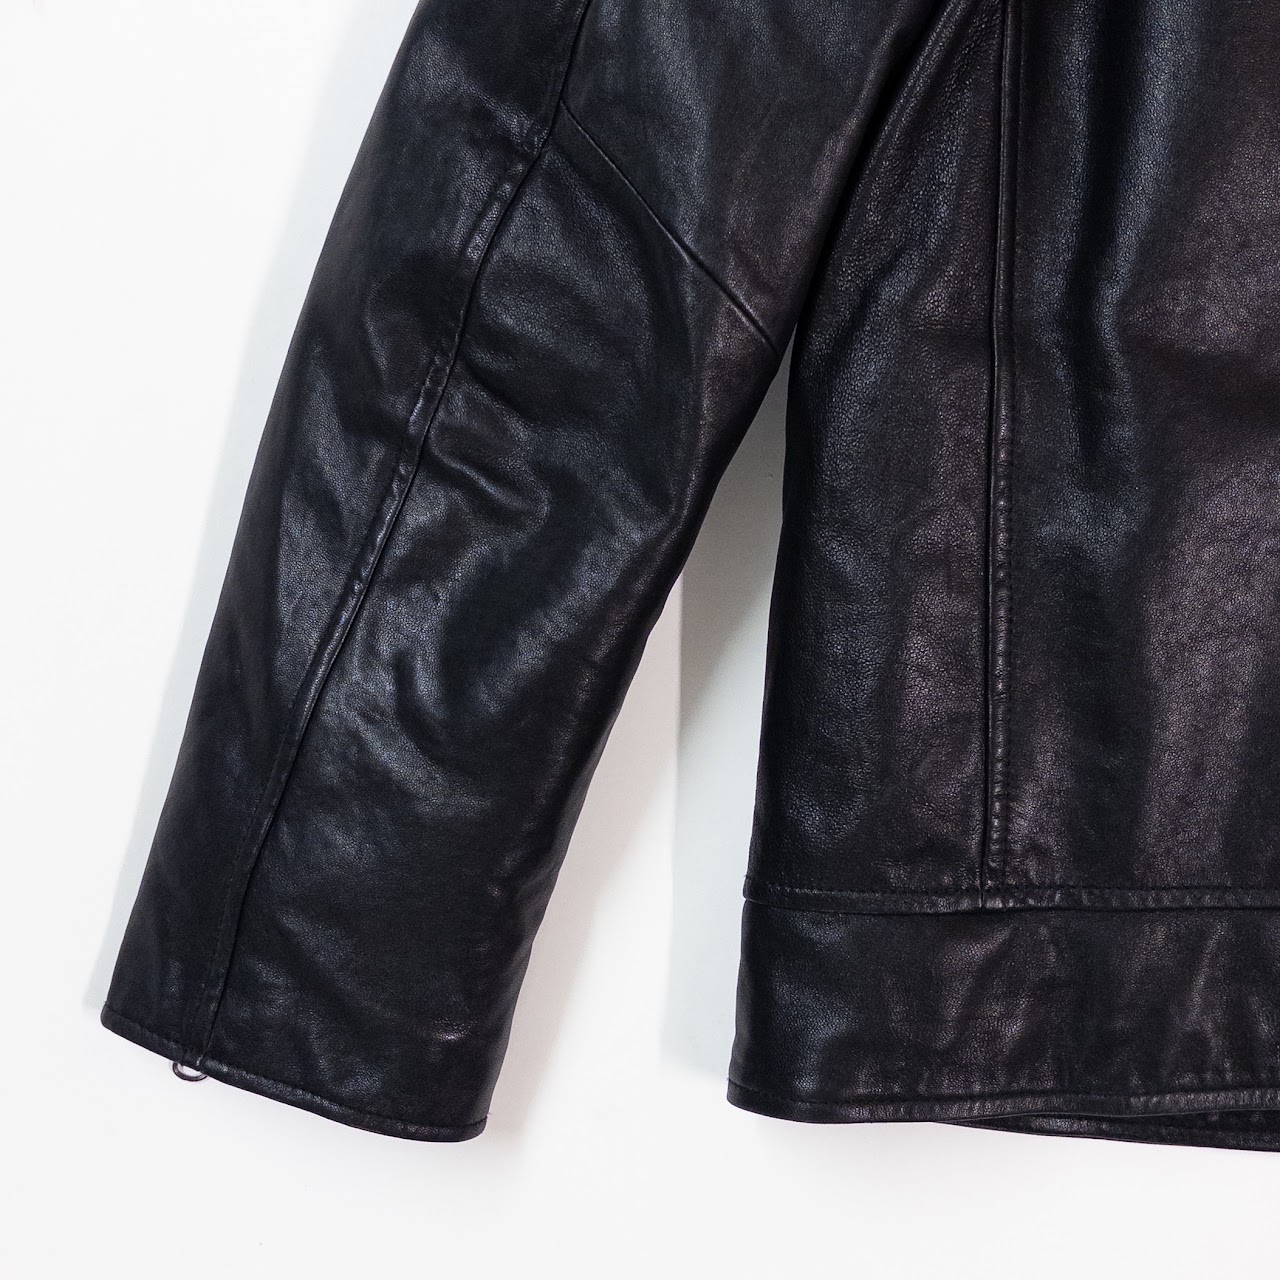 Mackage Insulated Leather Motorcycle Style Jacket